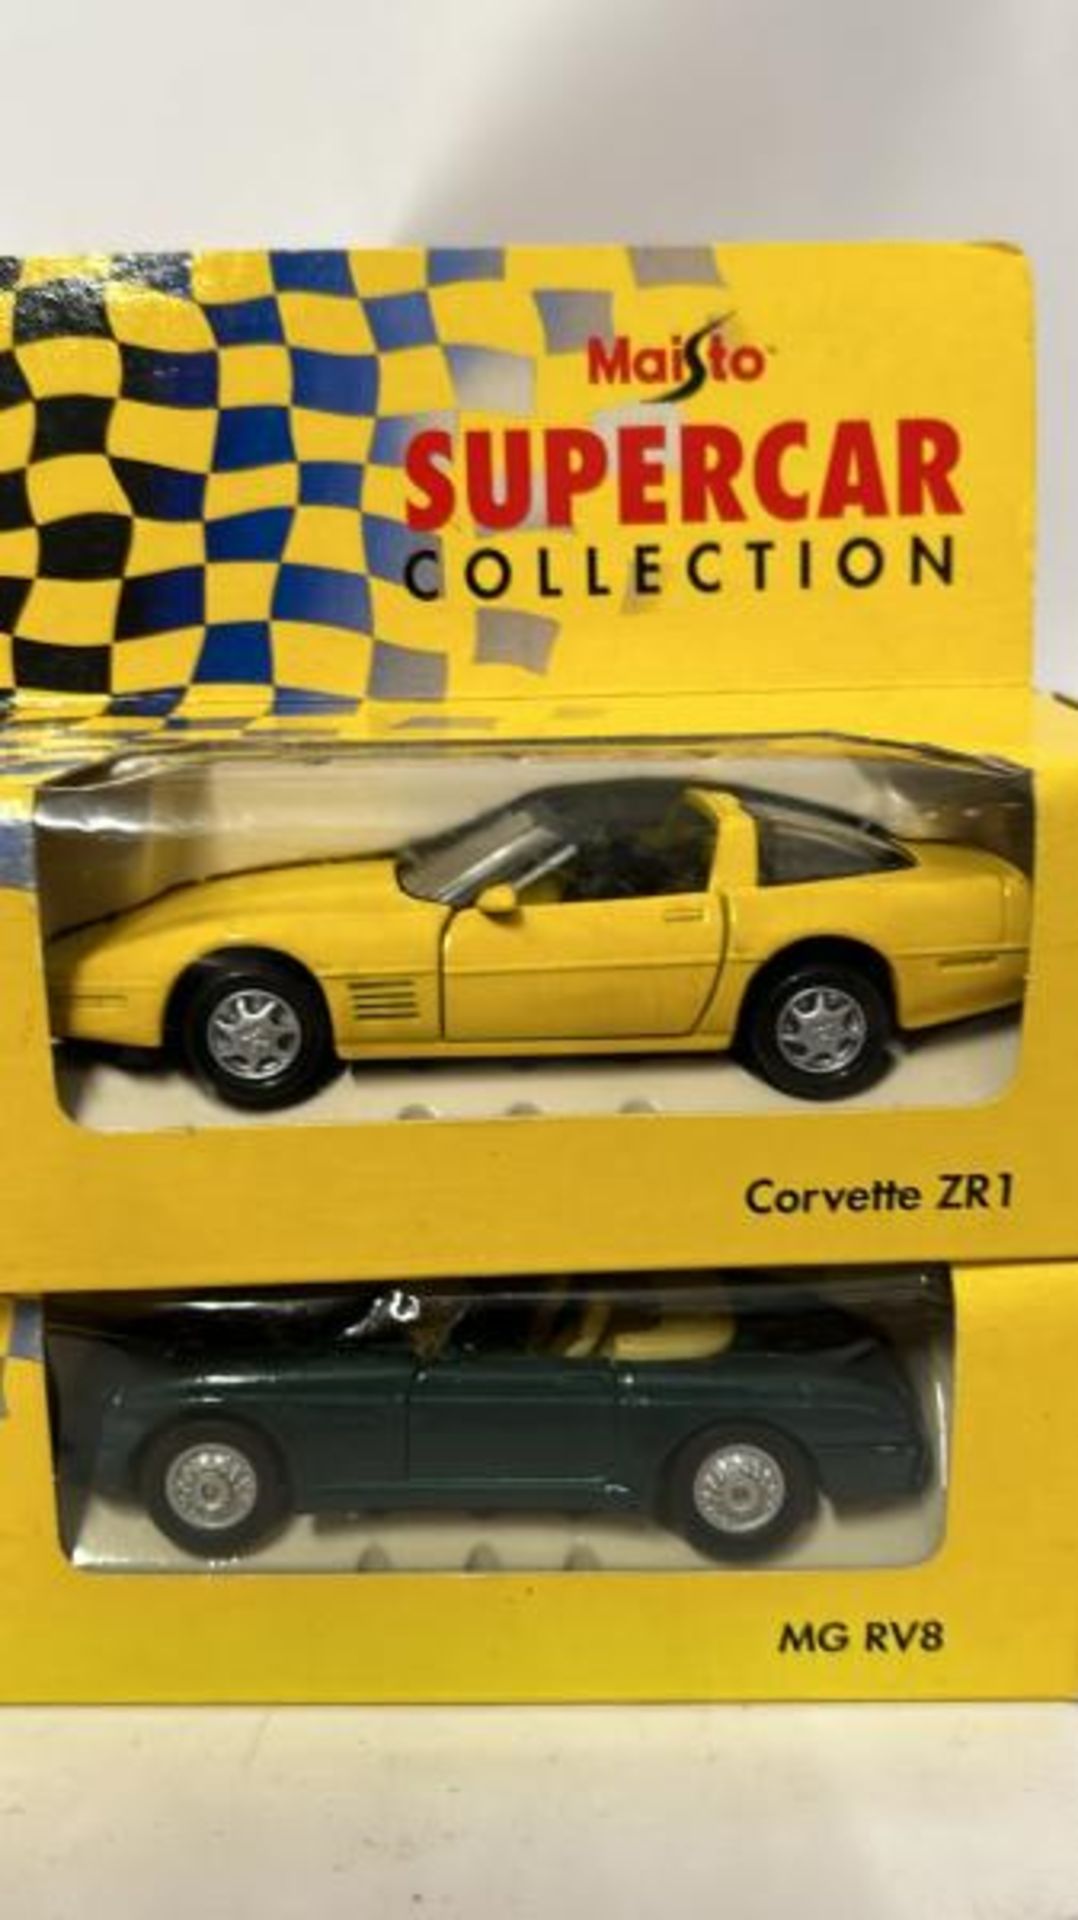 Four Maisto Super car collection models with seven Corgi 1988 promotional Jaguar racing cars, sealed - Image 3 of 4